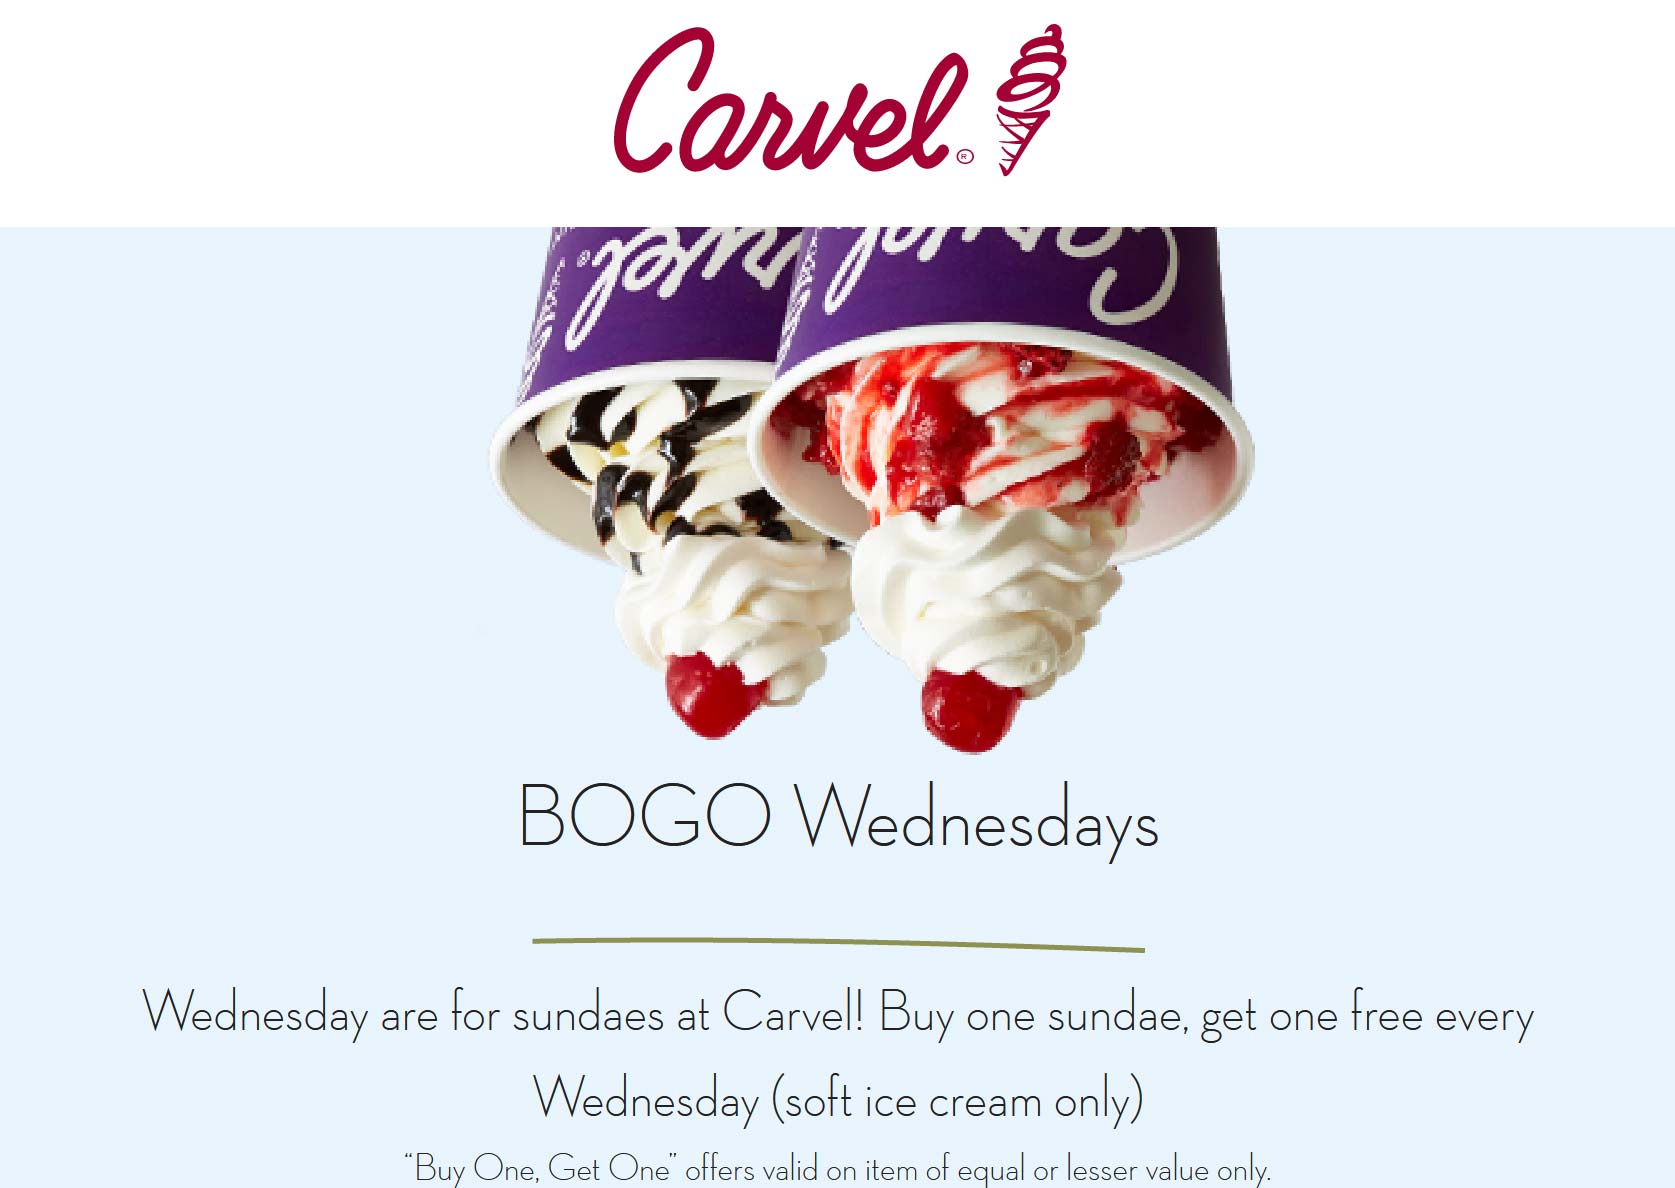 Carvel restaurants Coupon  Second ice cream sundae free today at Carvel #carvel 